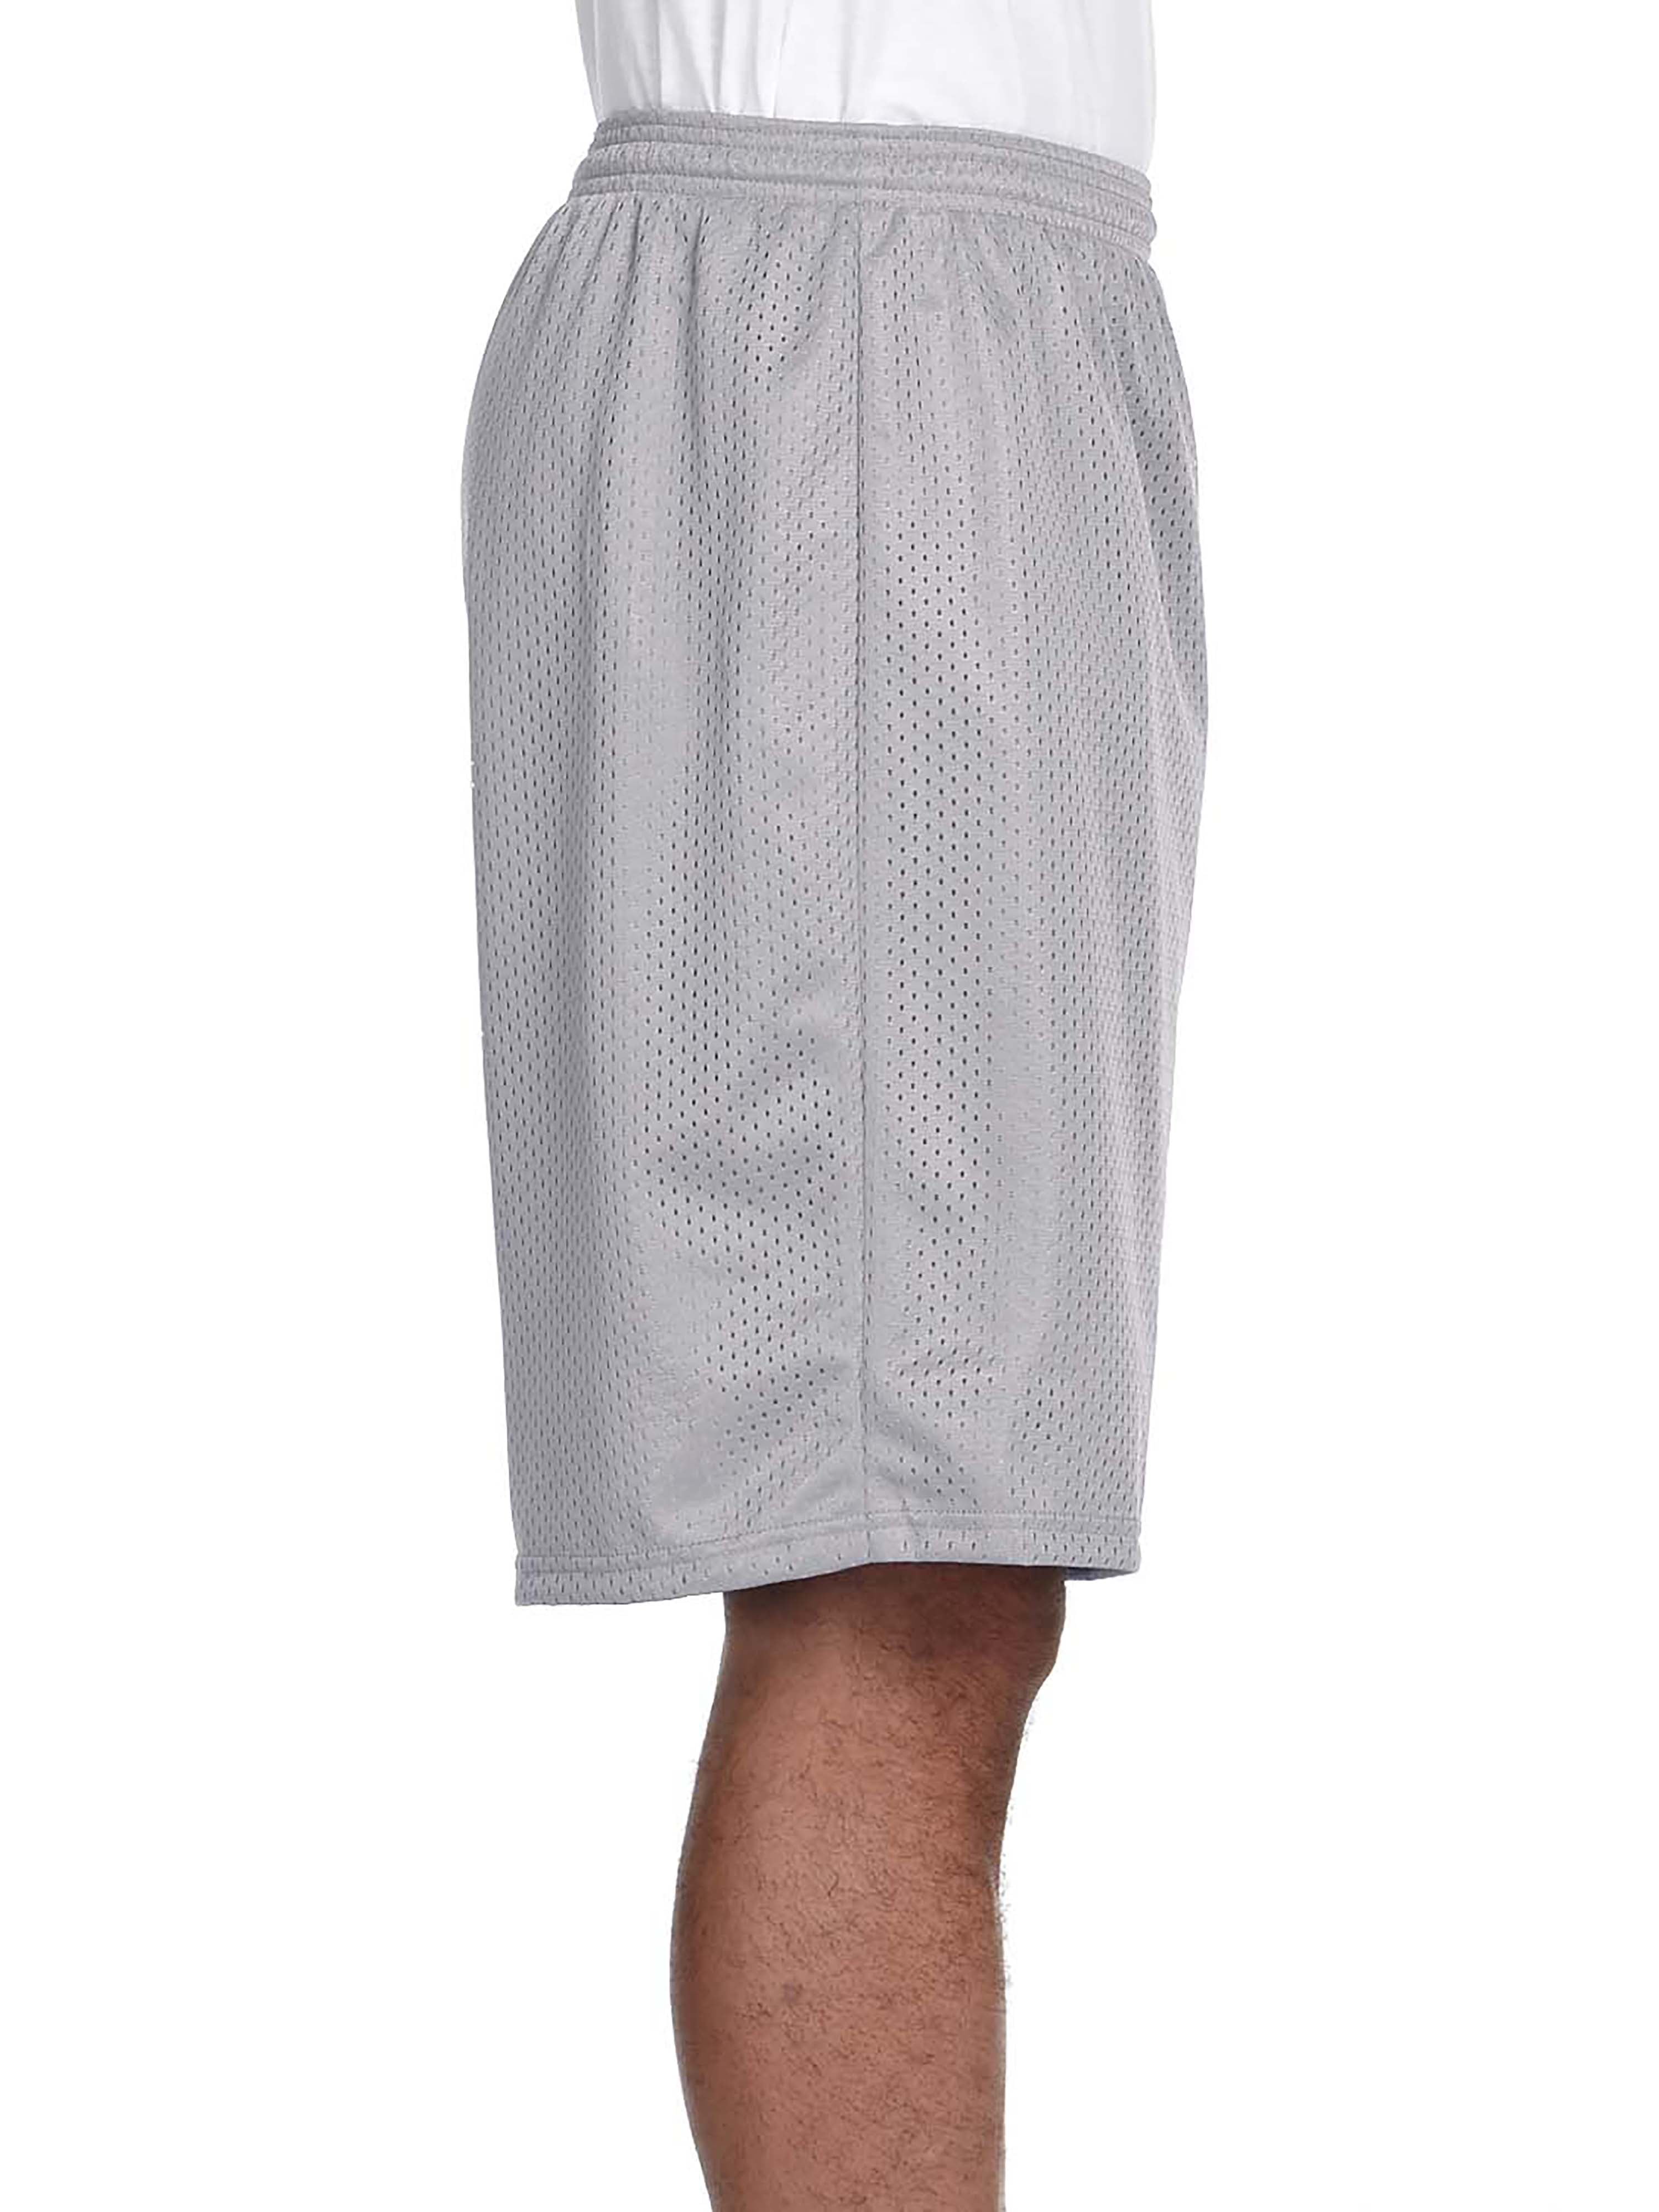 Ma Croix Men's Mesh Shorts With Pockets Gym Basketball Activewear - Walmart .com